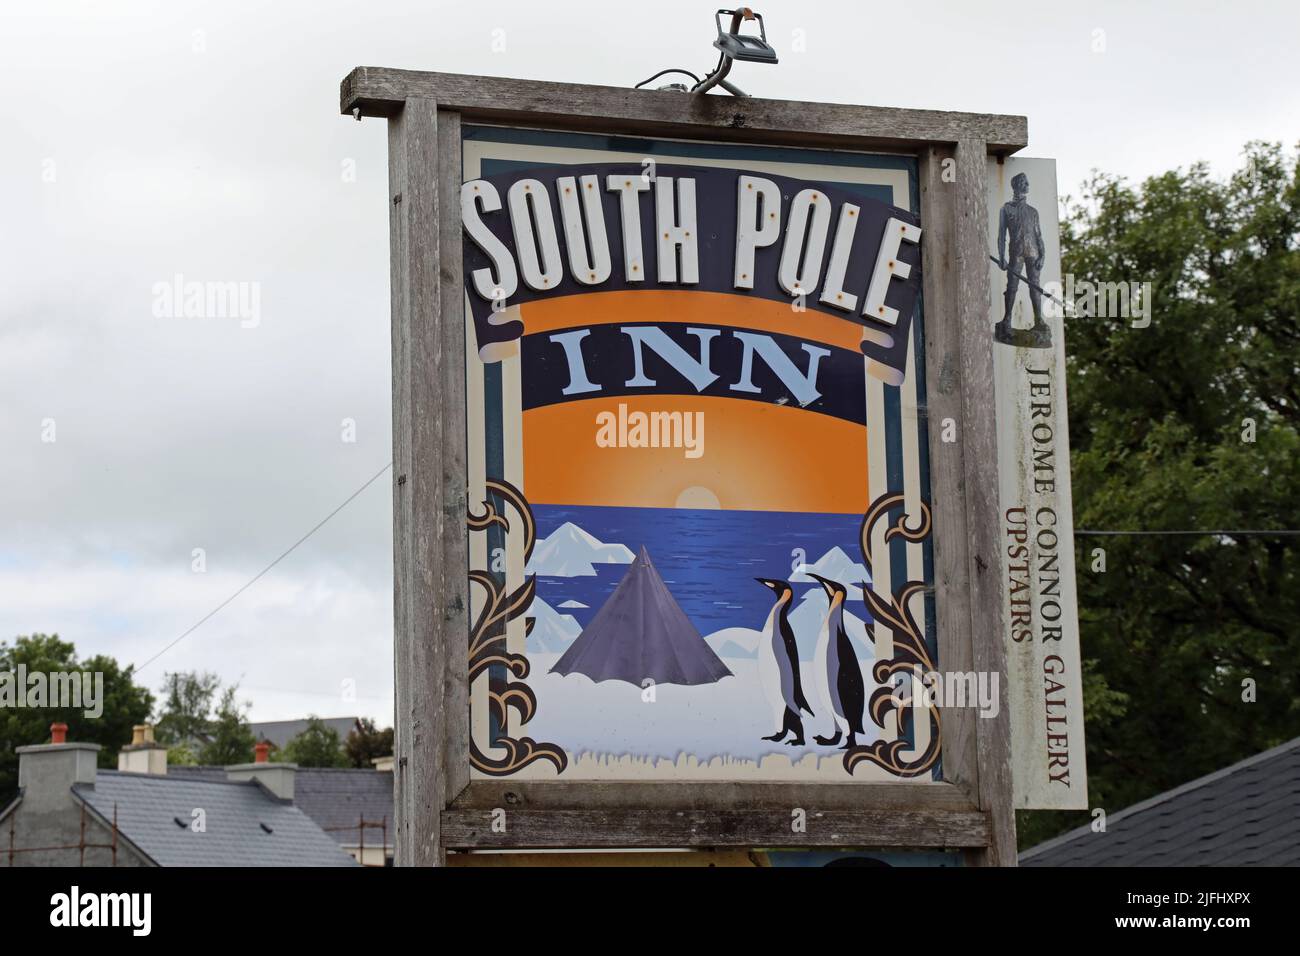 South Pole Inn pub sign at Annascaul in County Kerry Stock Photo